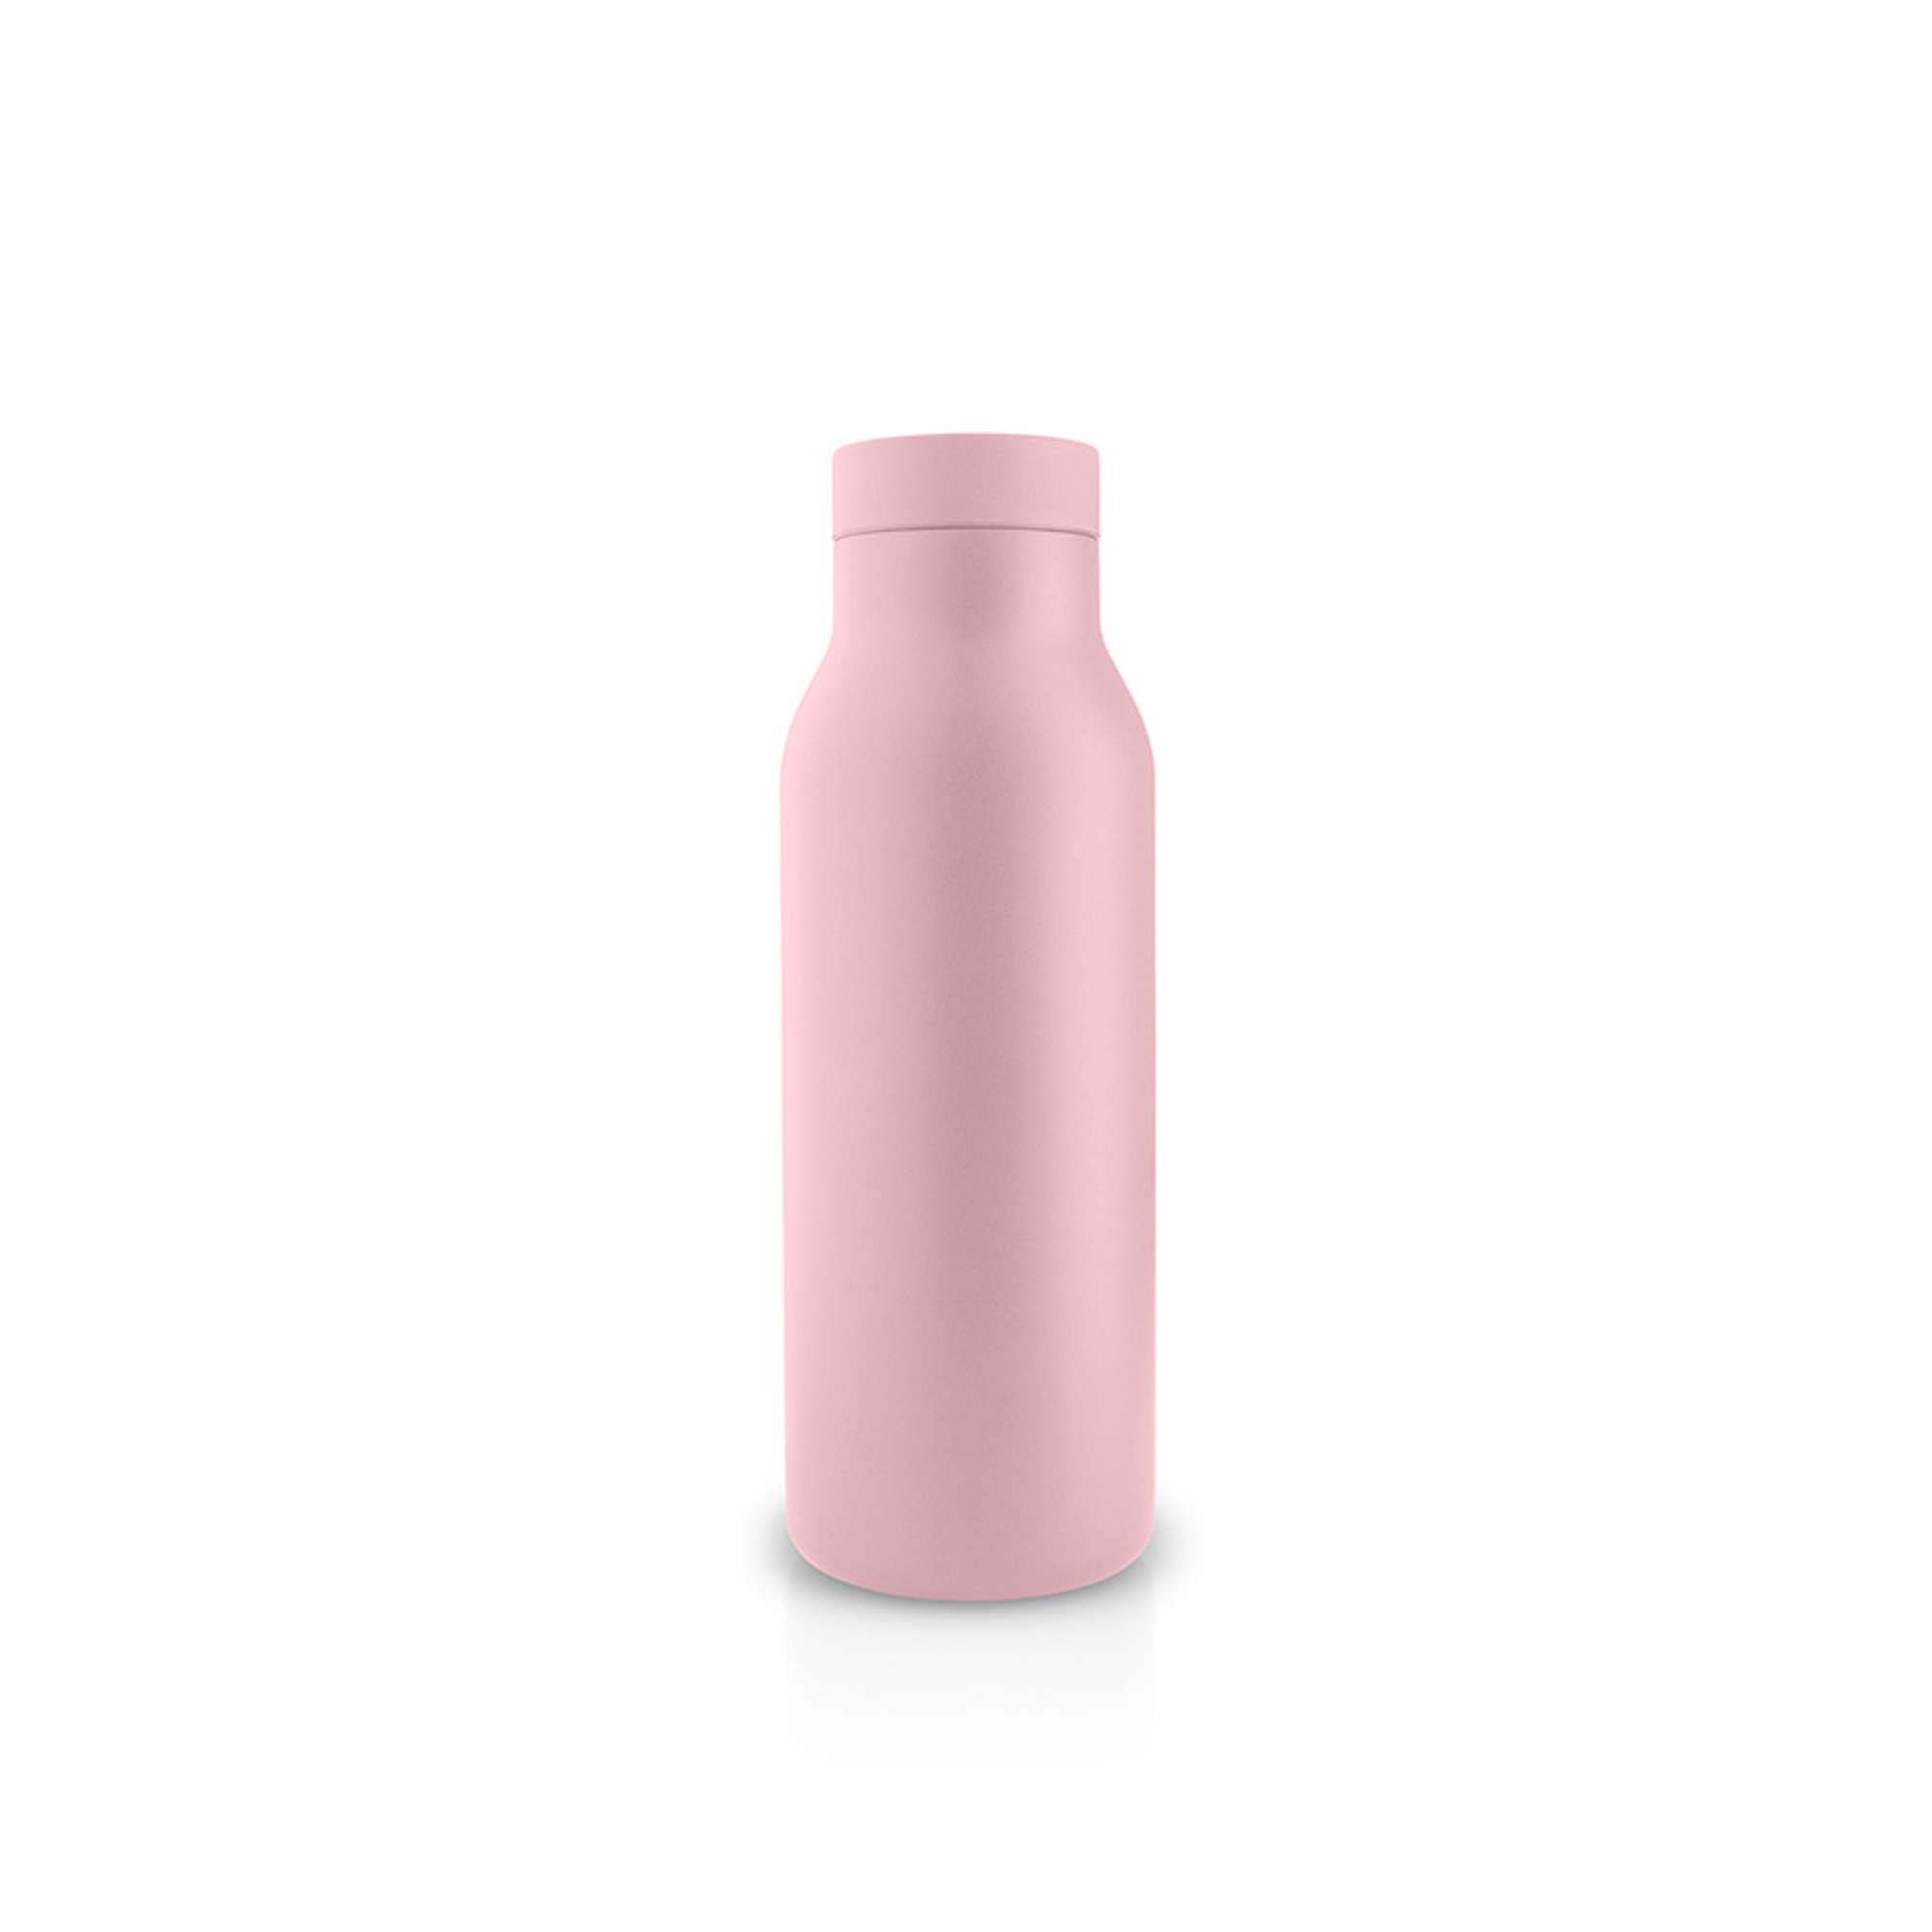 Urban termosflaske - 0,5 liter - Rose quartz